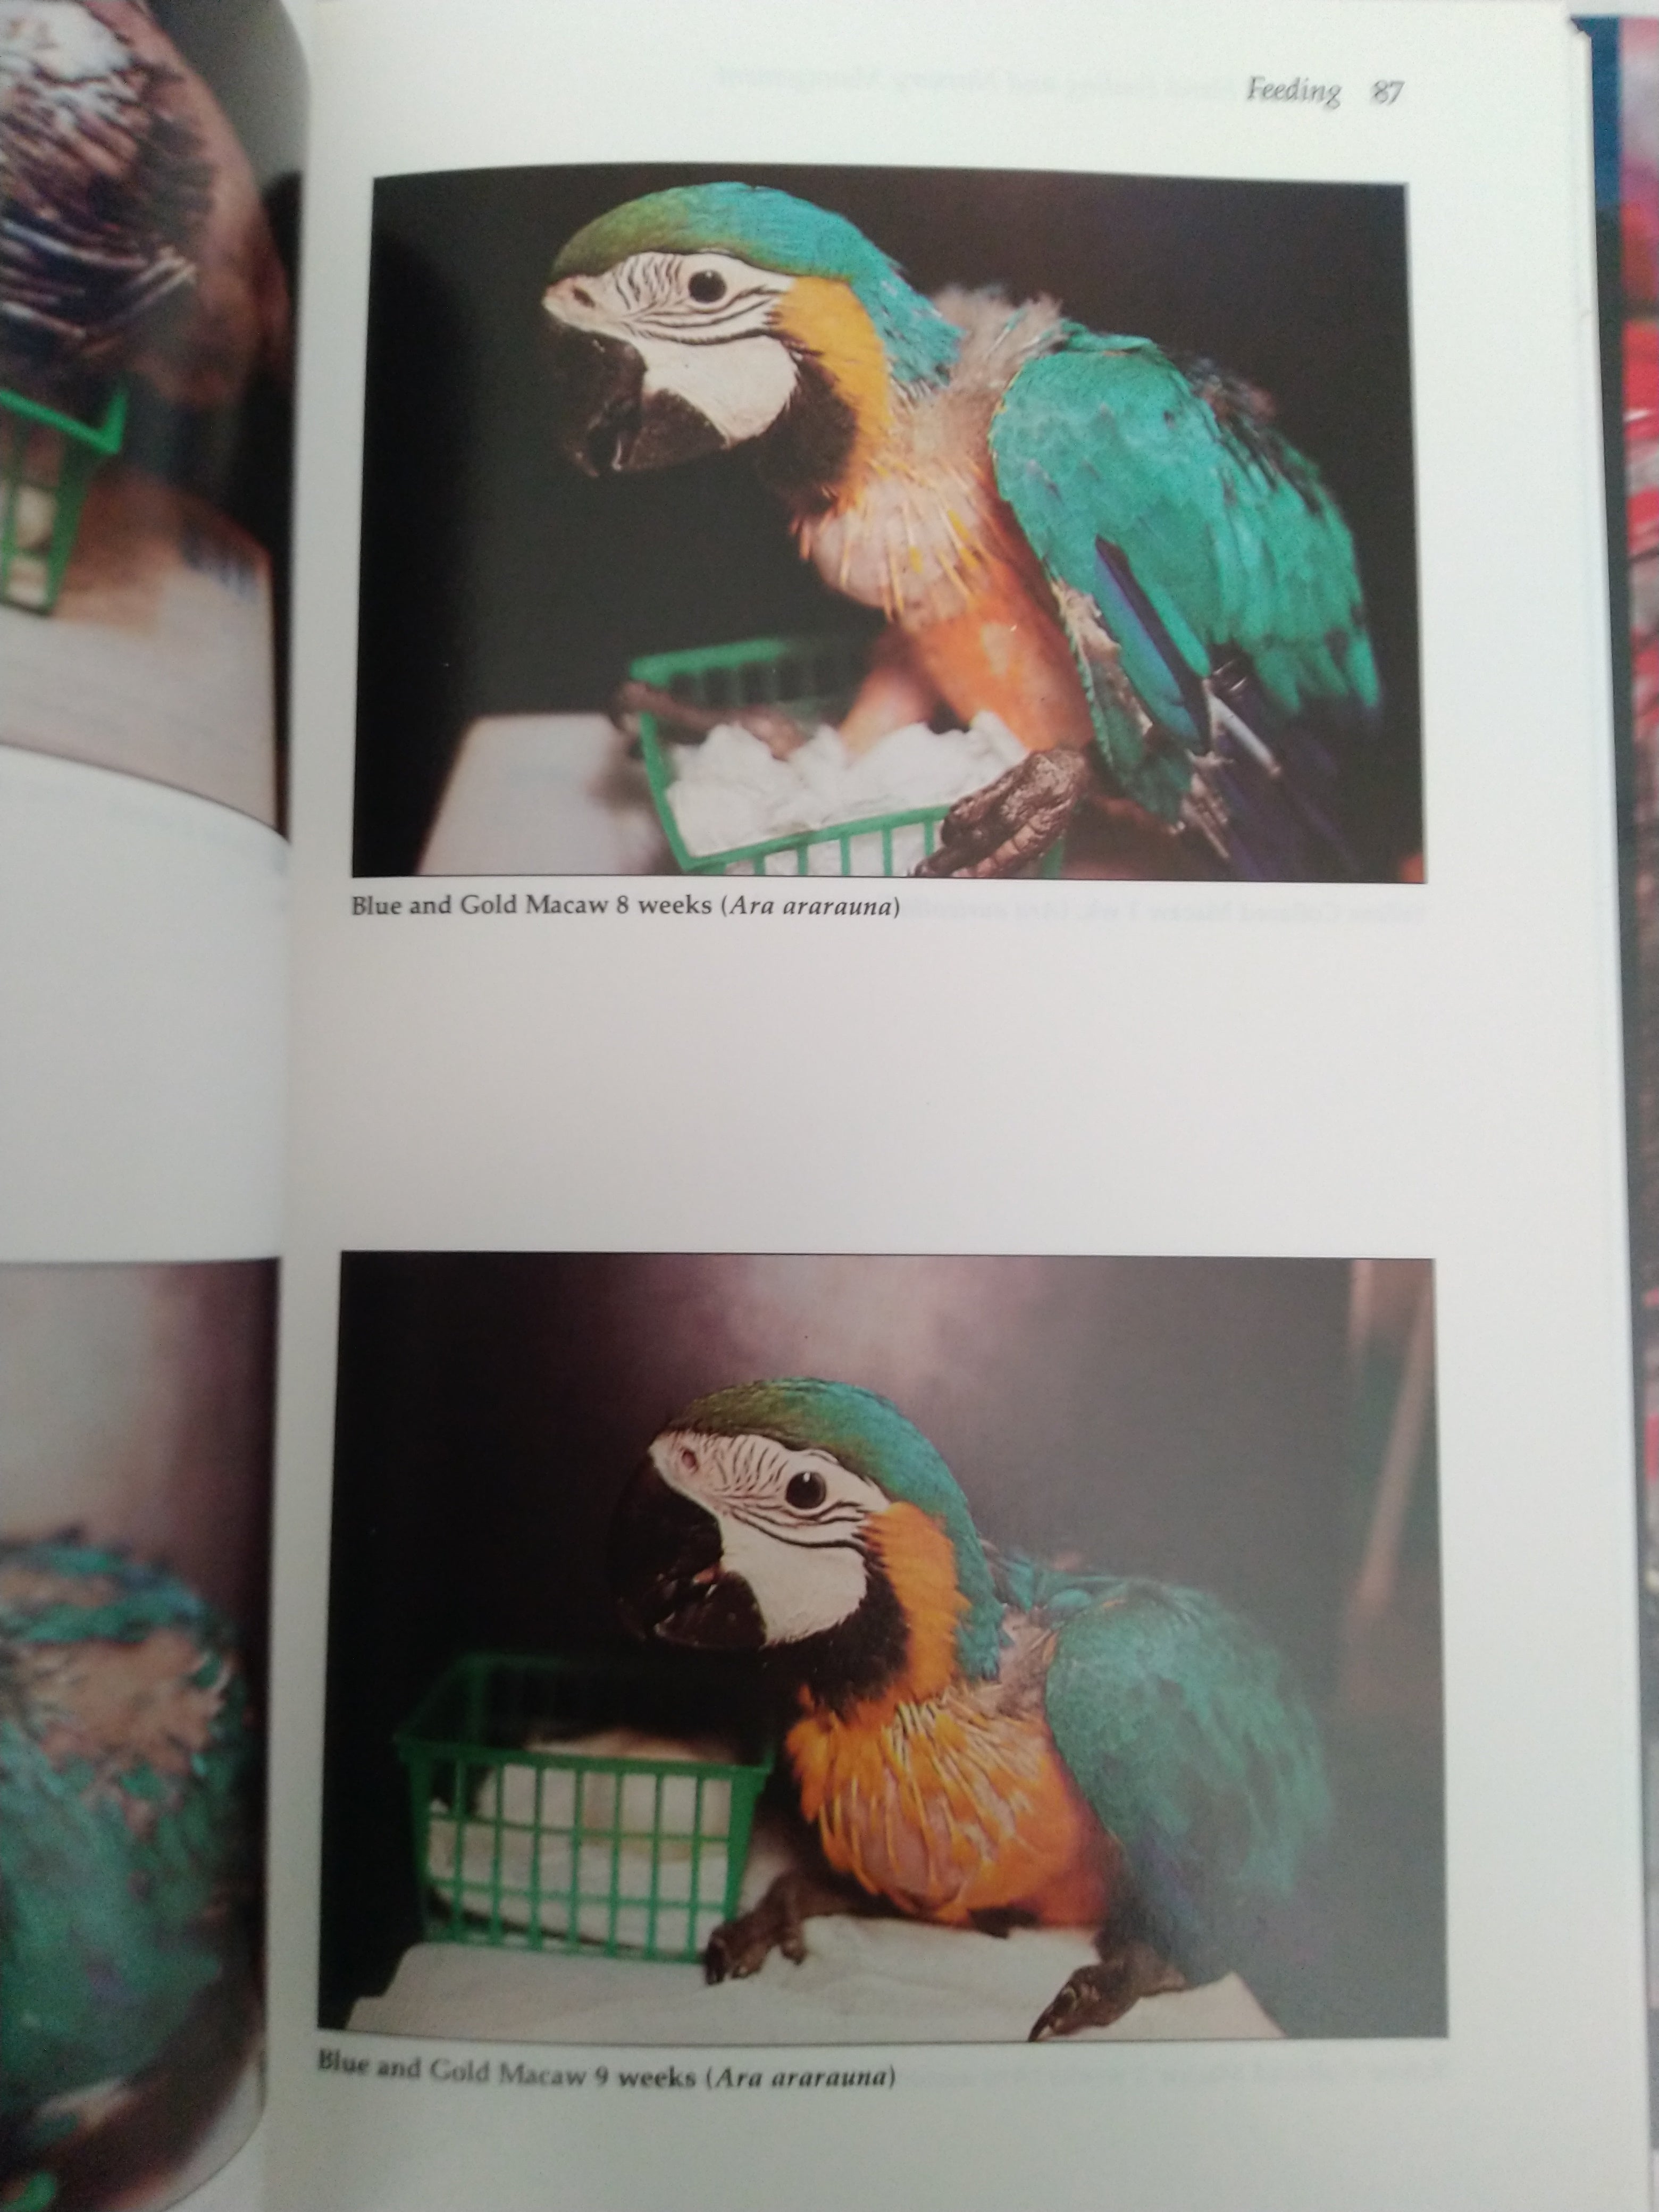 Parrots: Handfeeding and Nursery Management by Rick Jordan